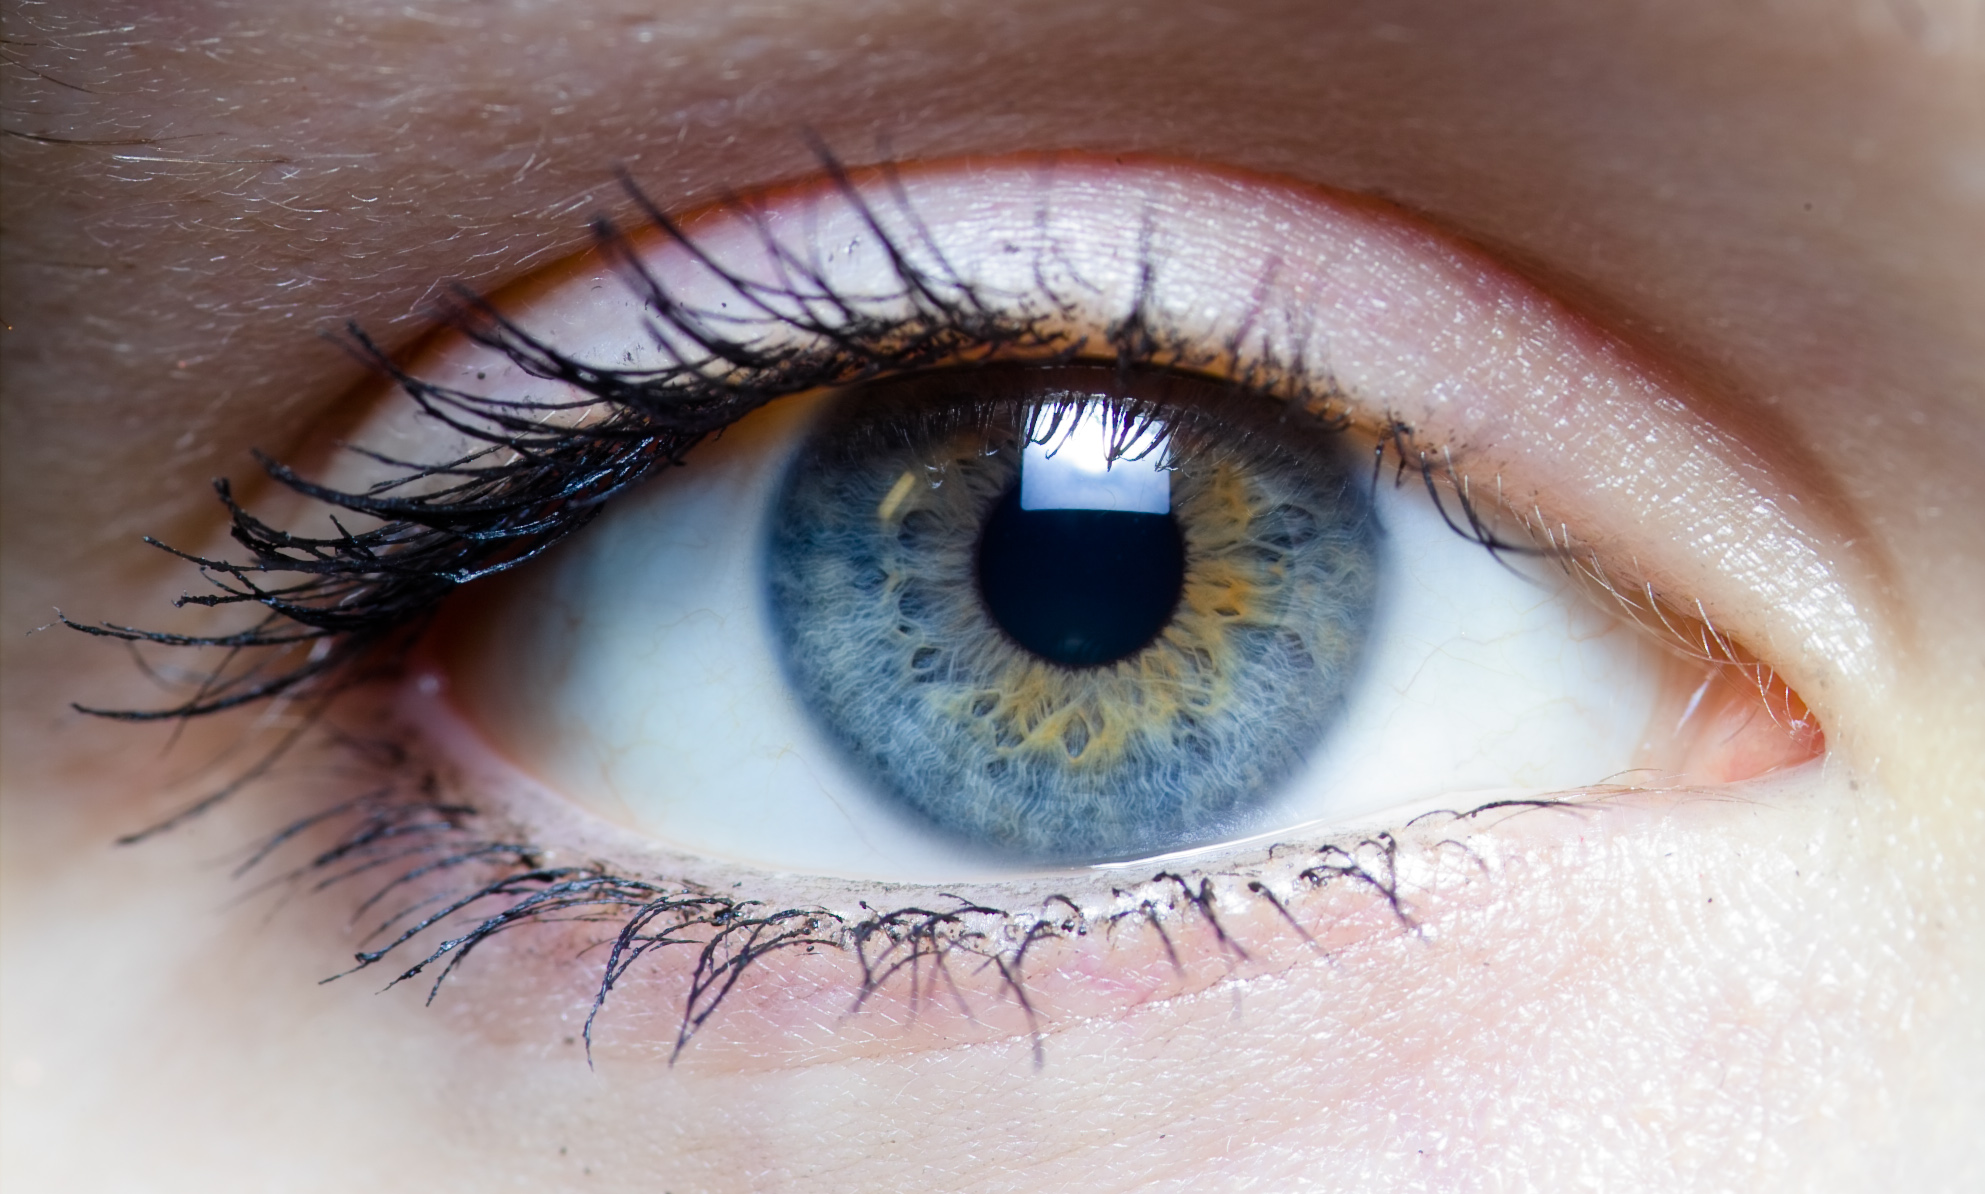 Eye sensor tracks intraocular pressure changes